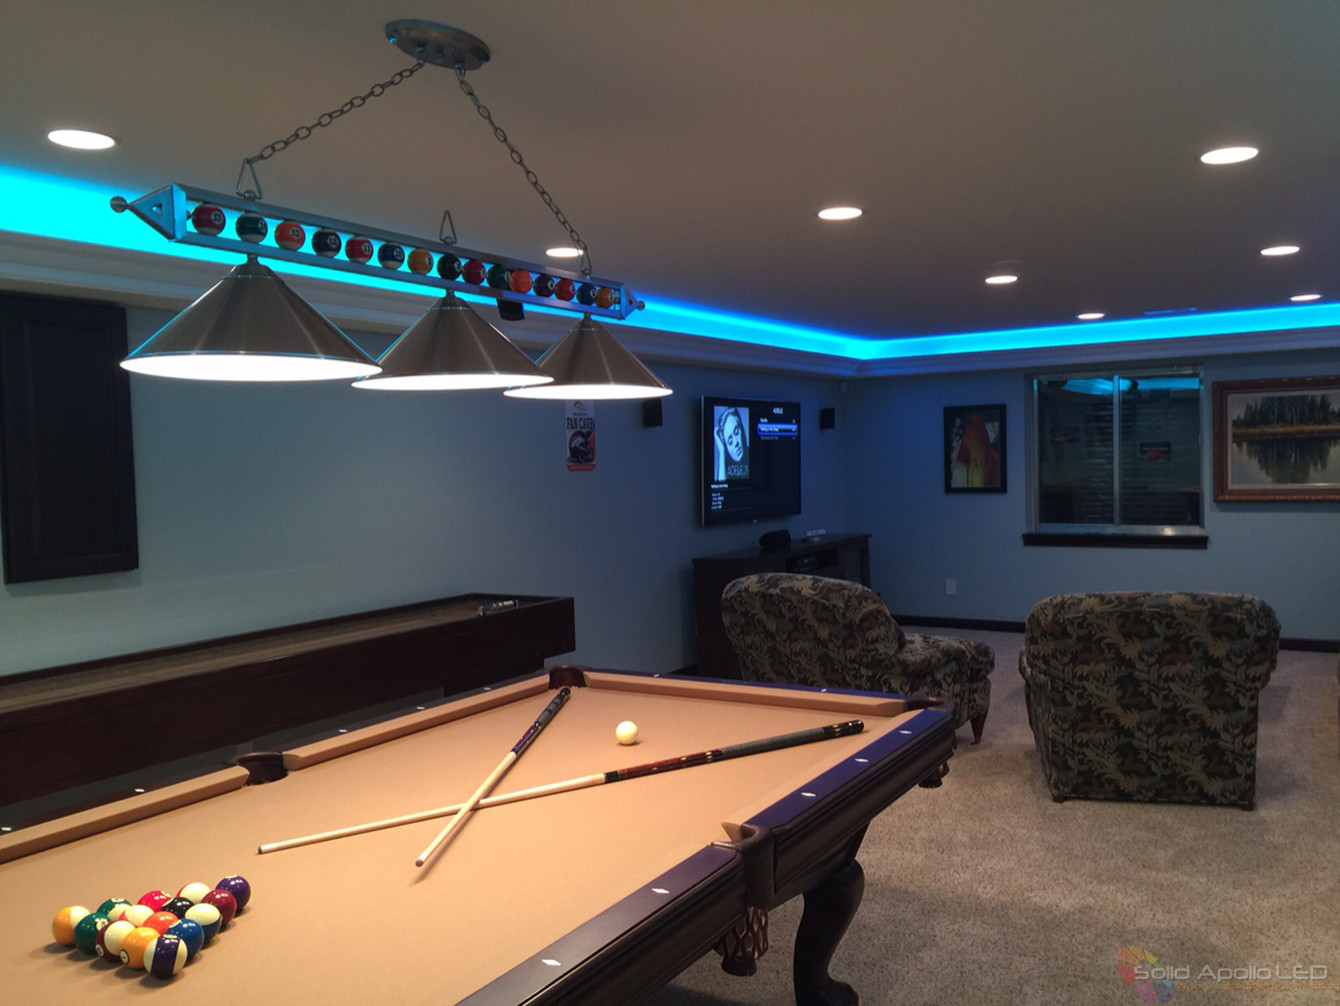 GAME Room LED light IDEAS